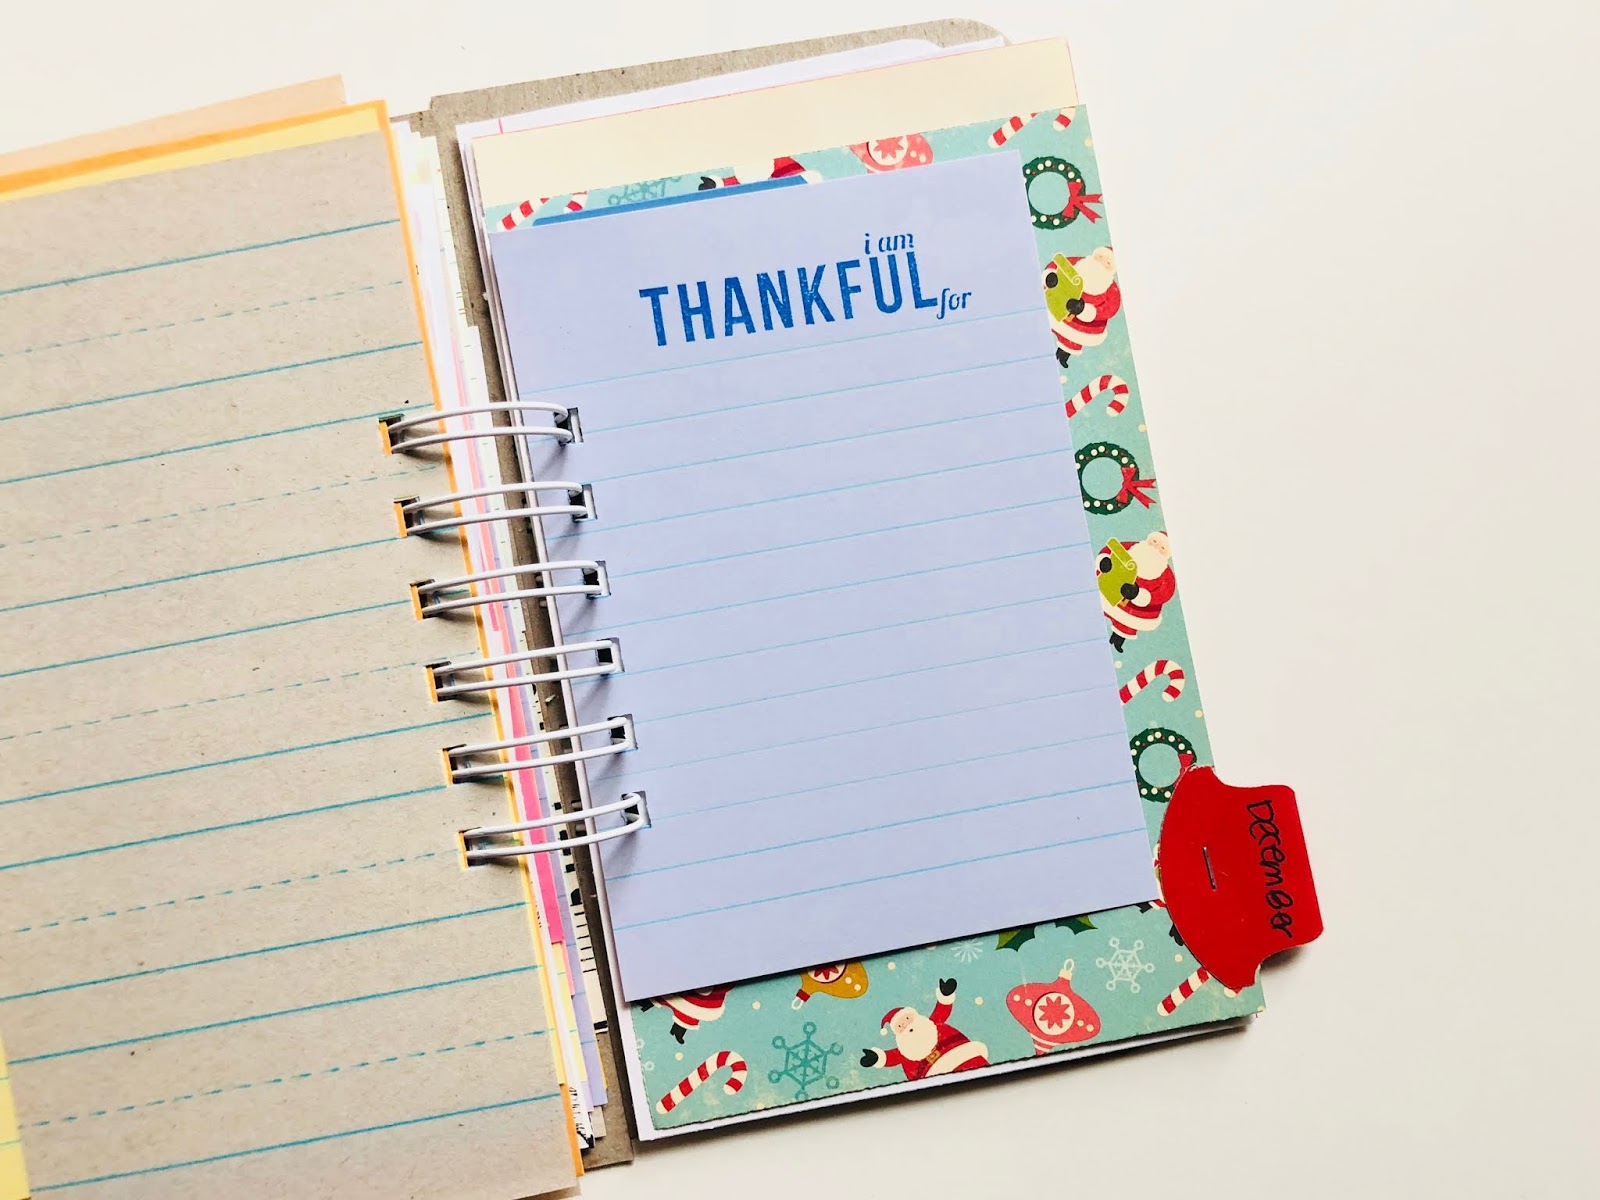 #gratitude journal #gratitude #grateful #thankful #thankfulness #mindfulness #365 Things I Am Grateful For #gratefulness #journal #I Am Thankful For